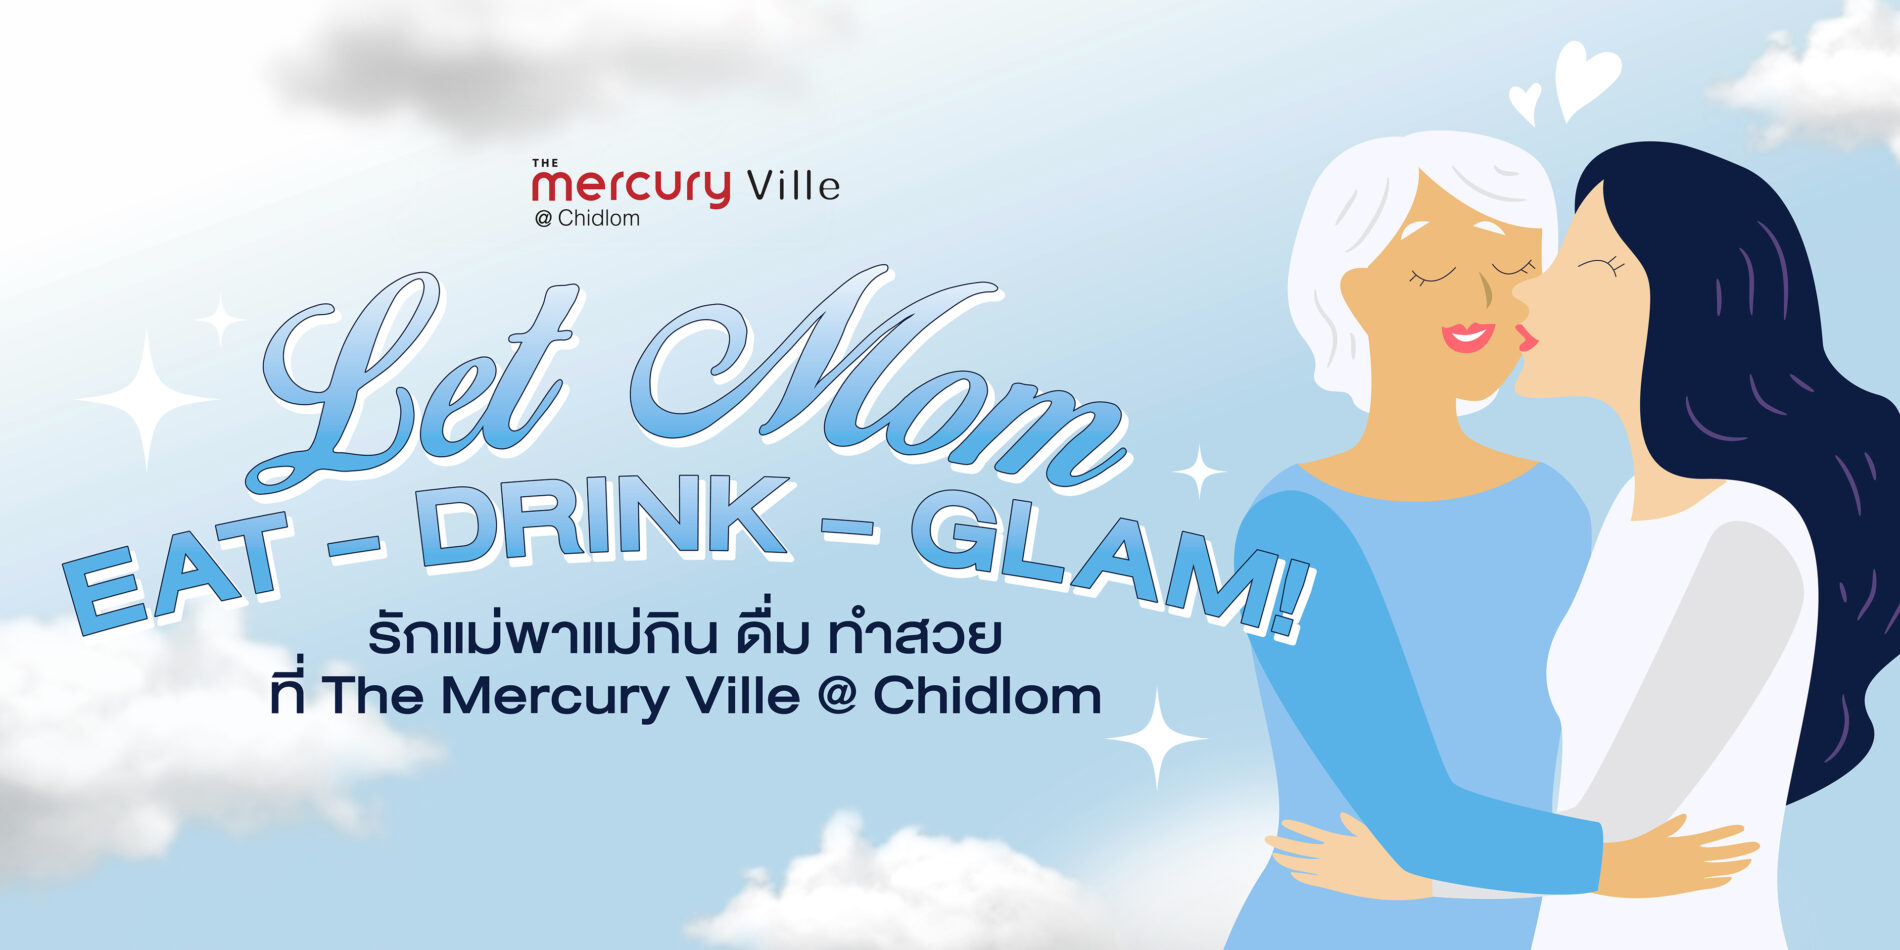 Let Mom Eat - Drink - Glam! รักแม่พาแม่กิน ดื่ม ทำสวยที่ The Mercury Ville @ Chidlom